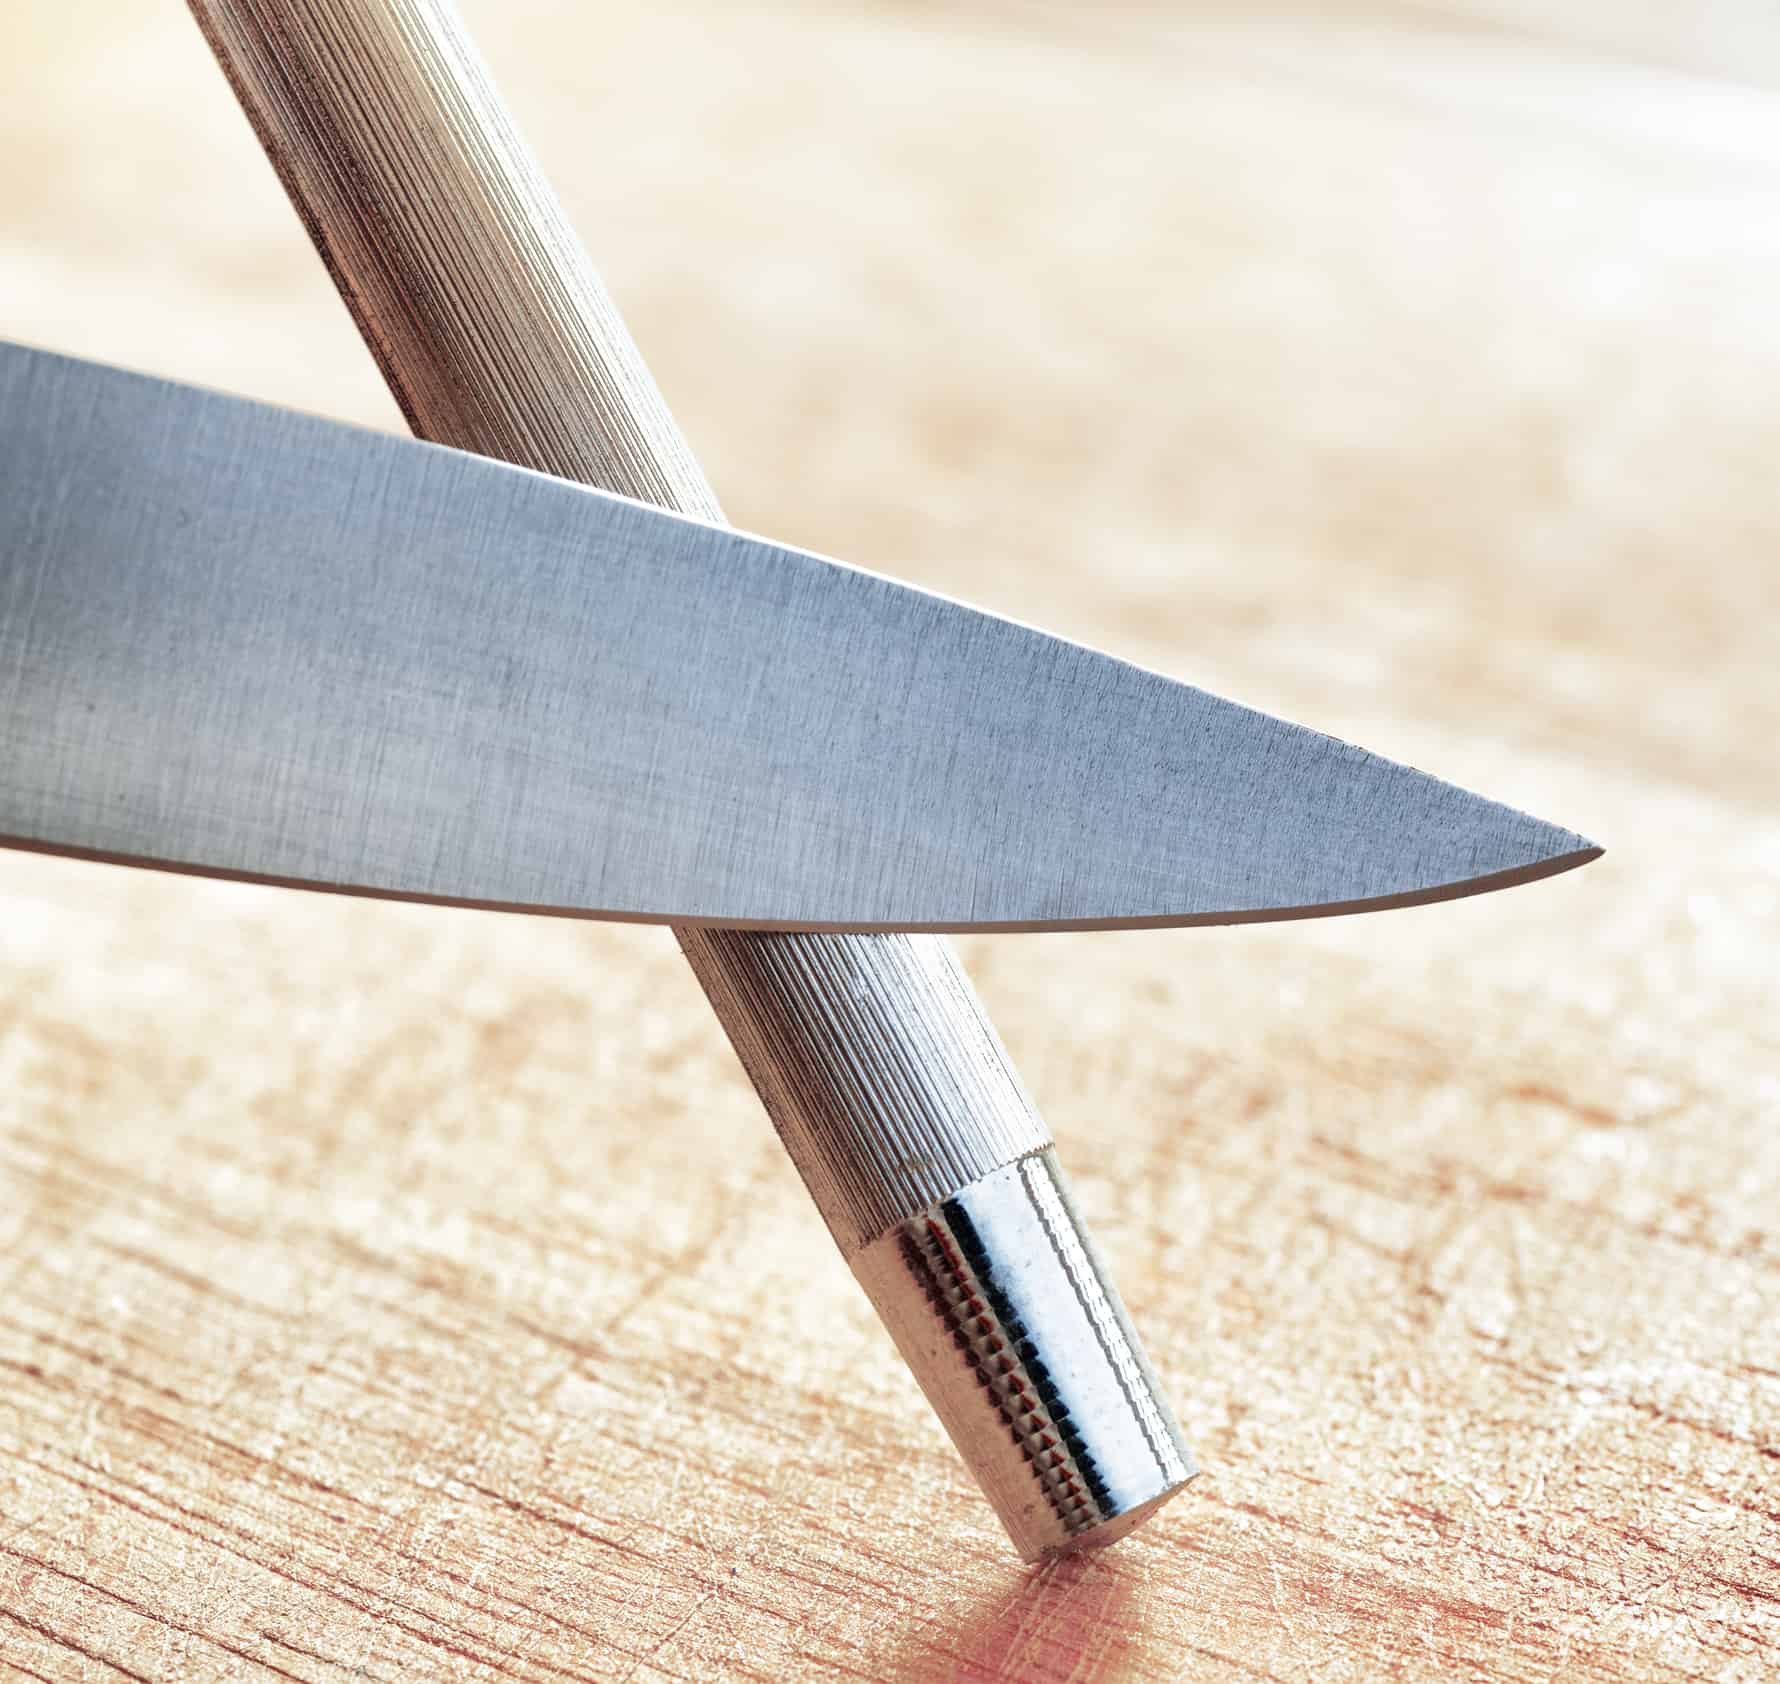 how to sharpen ceramic kitchen knives